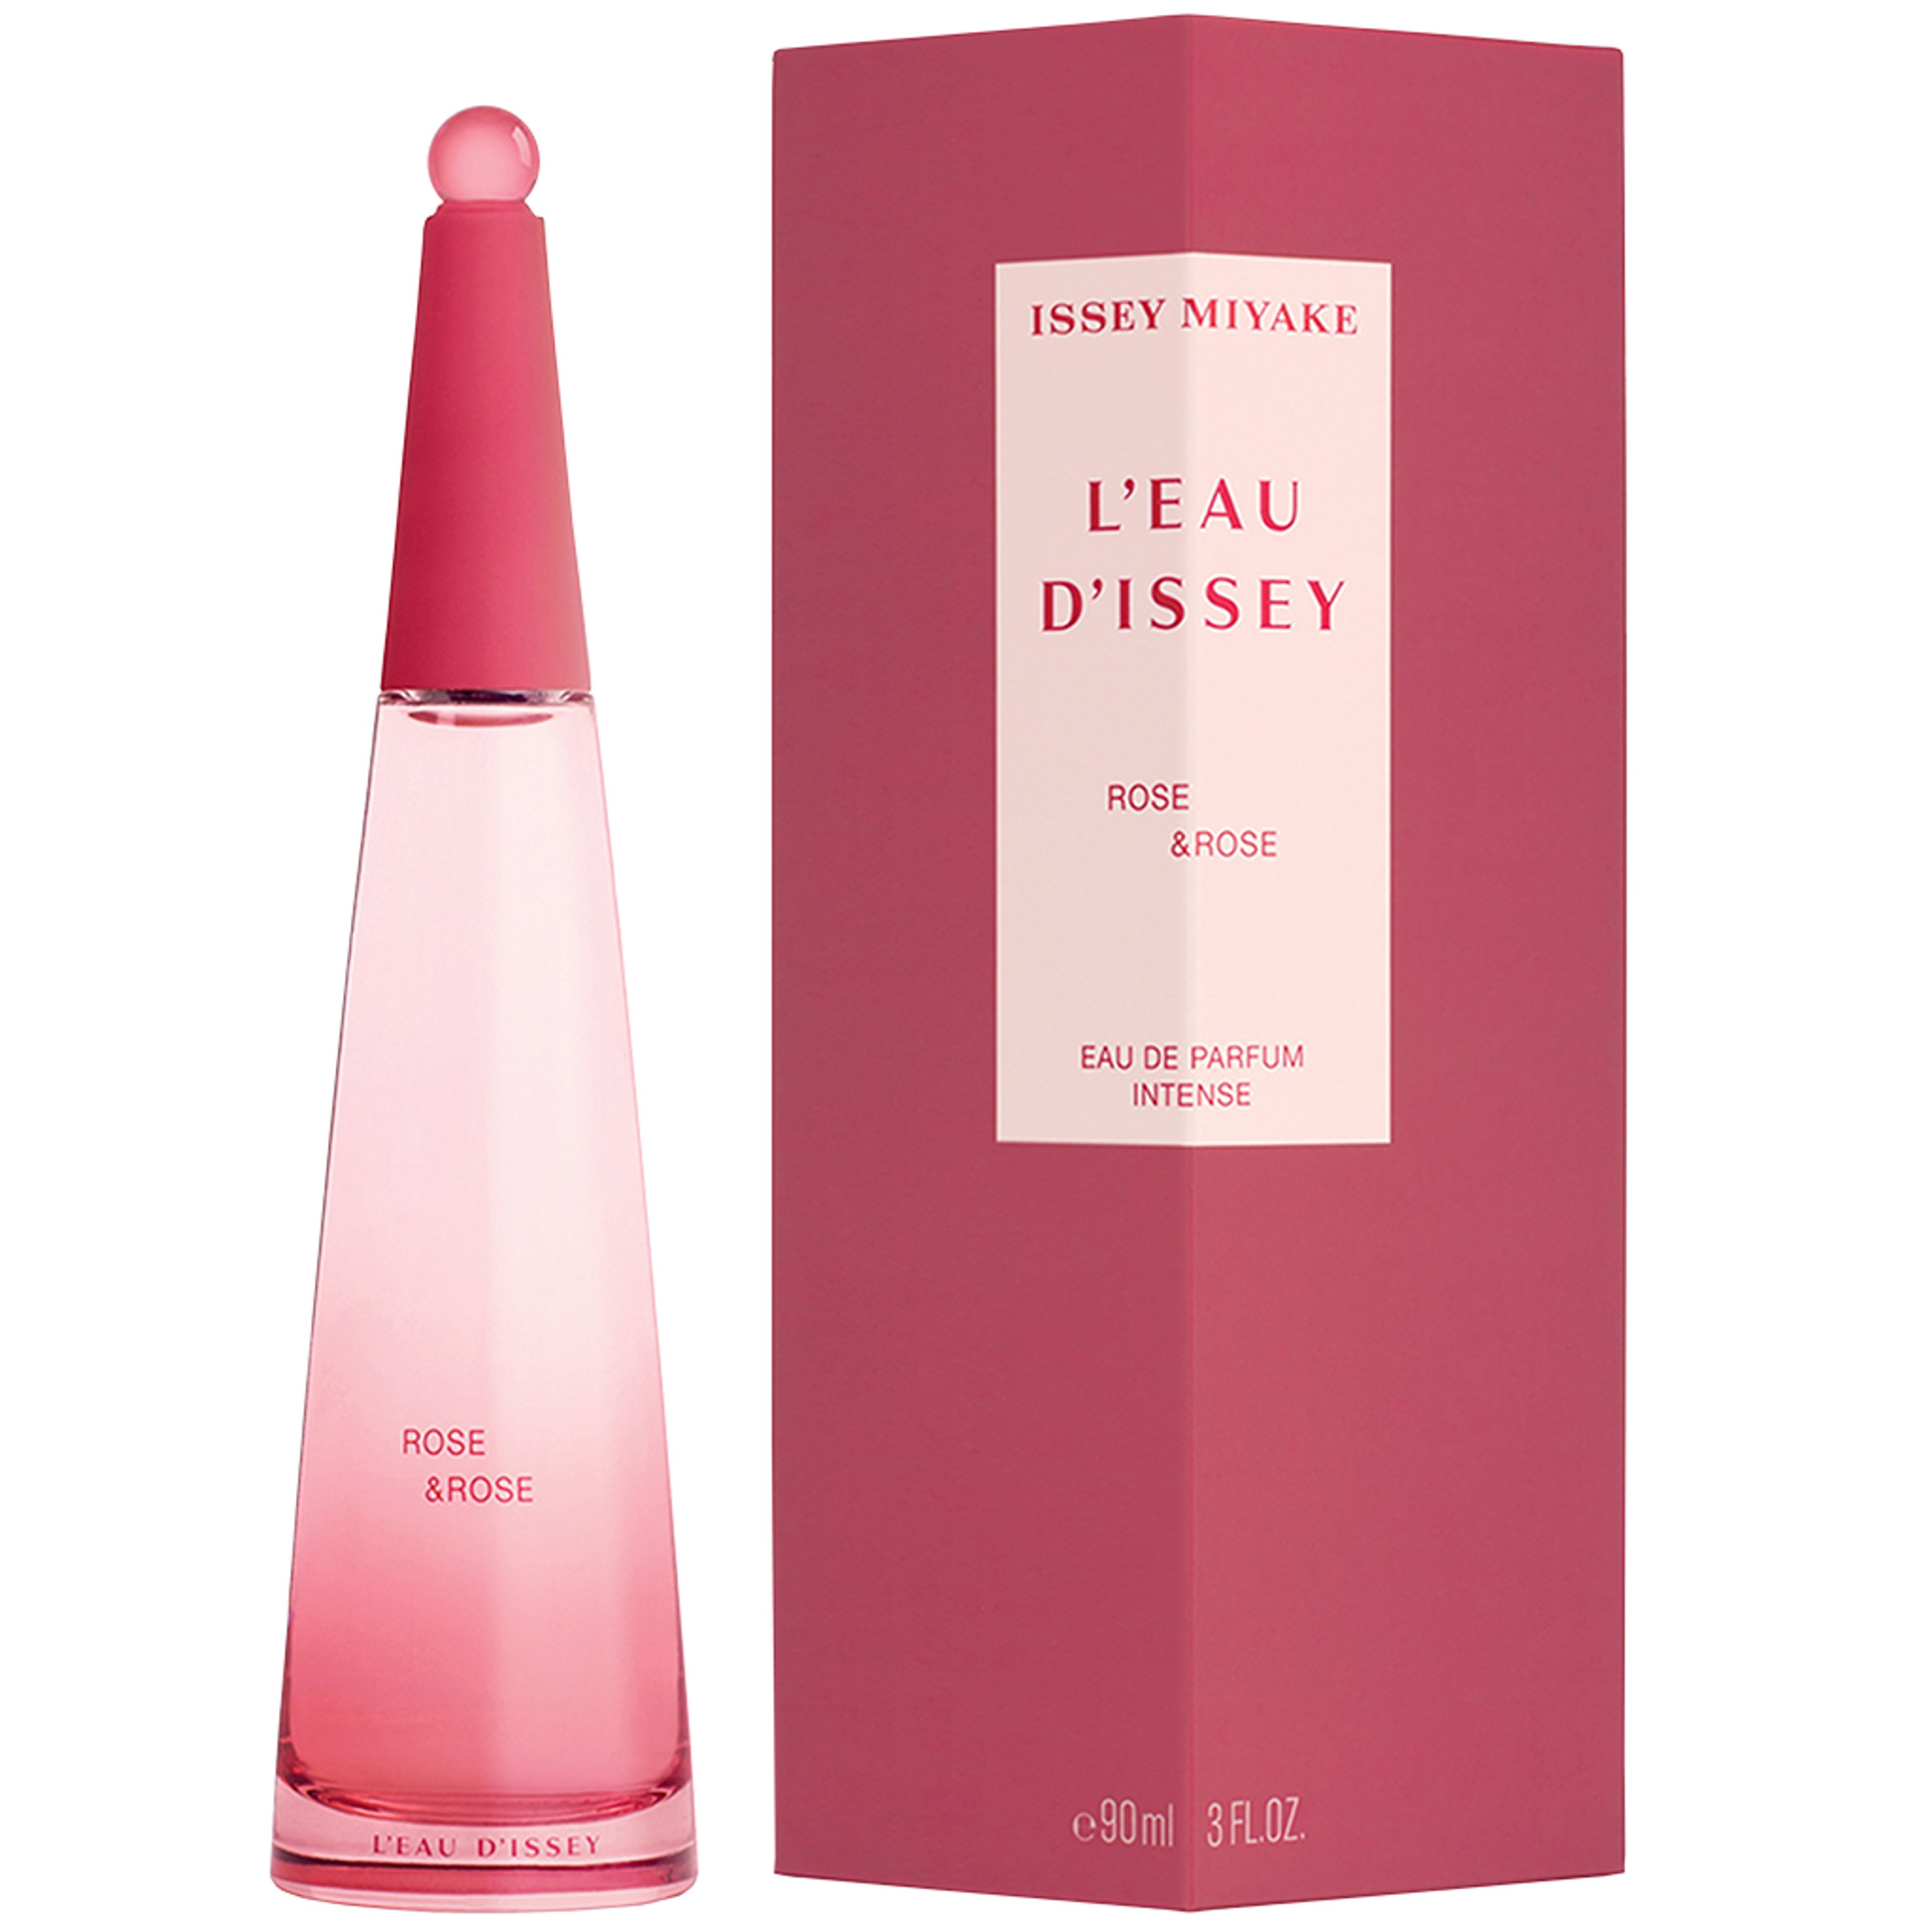 Issey Miyake L'eau D'issey Rose & Rose Eau De Parfum Intense 2